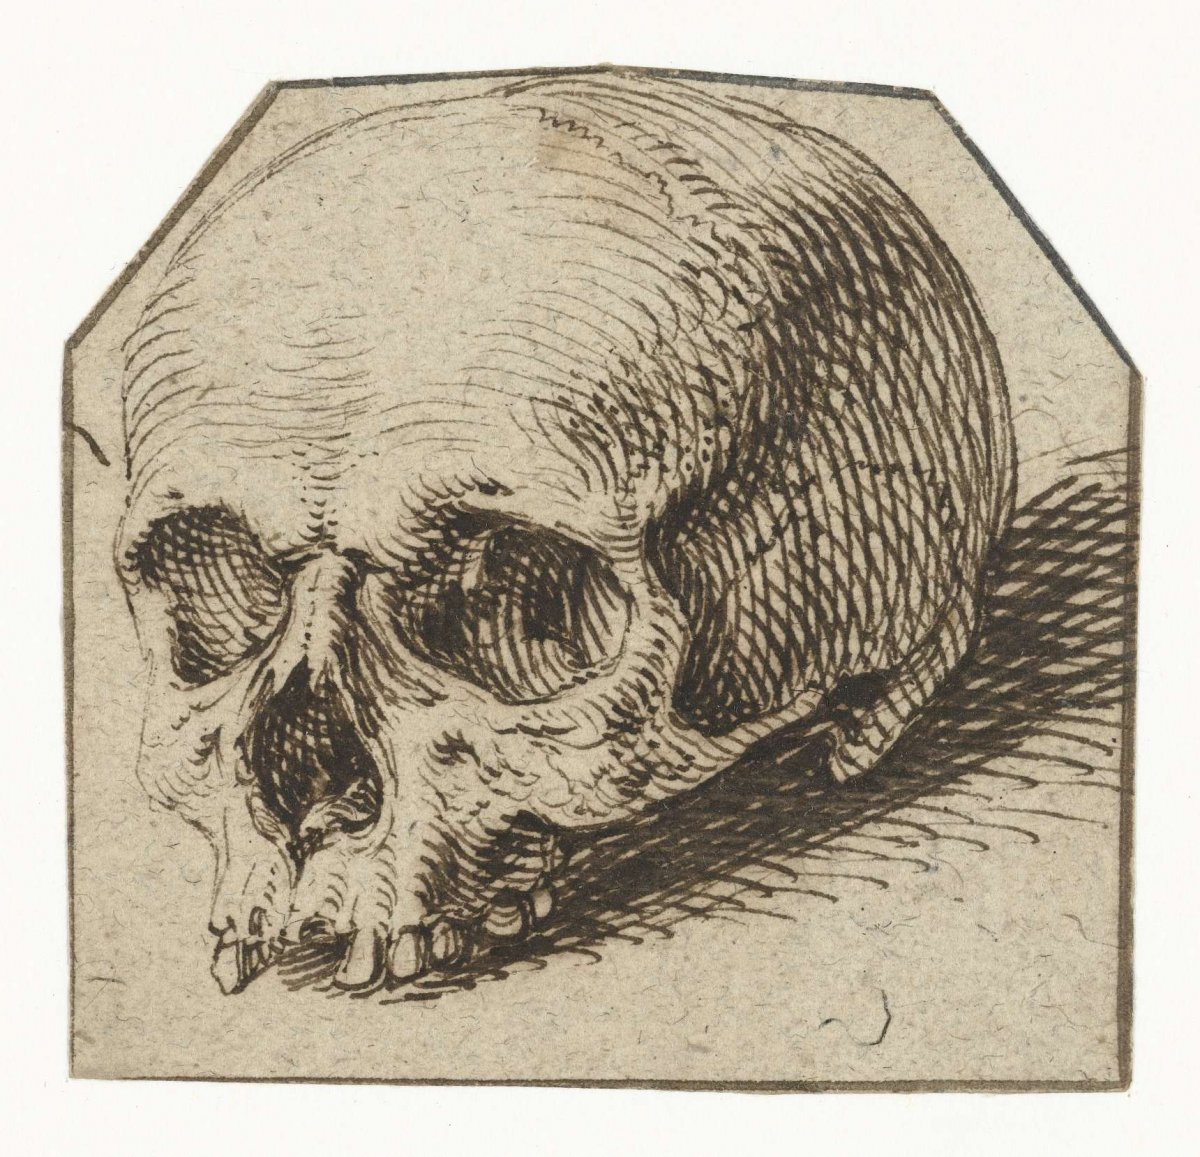 Study of a skull, Jacques de Gheyn (II), 1575 - 1625